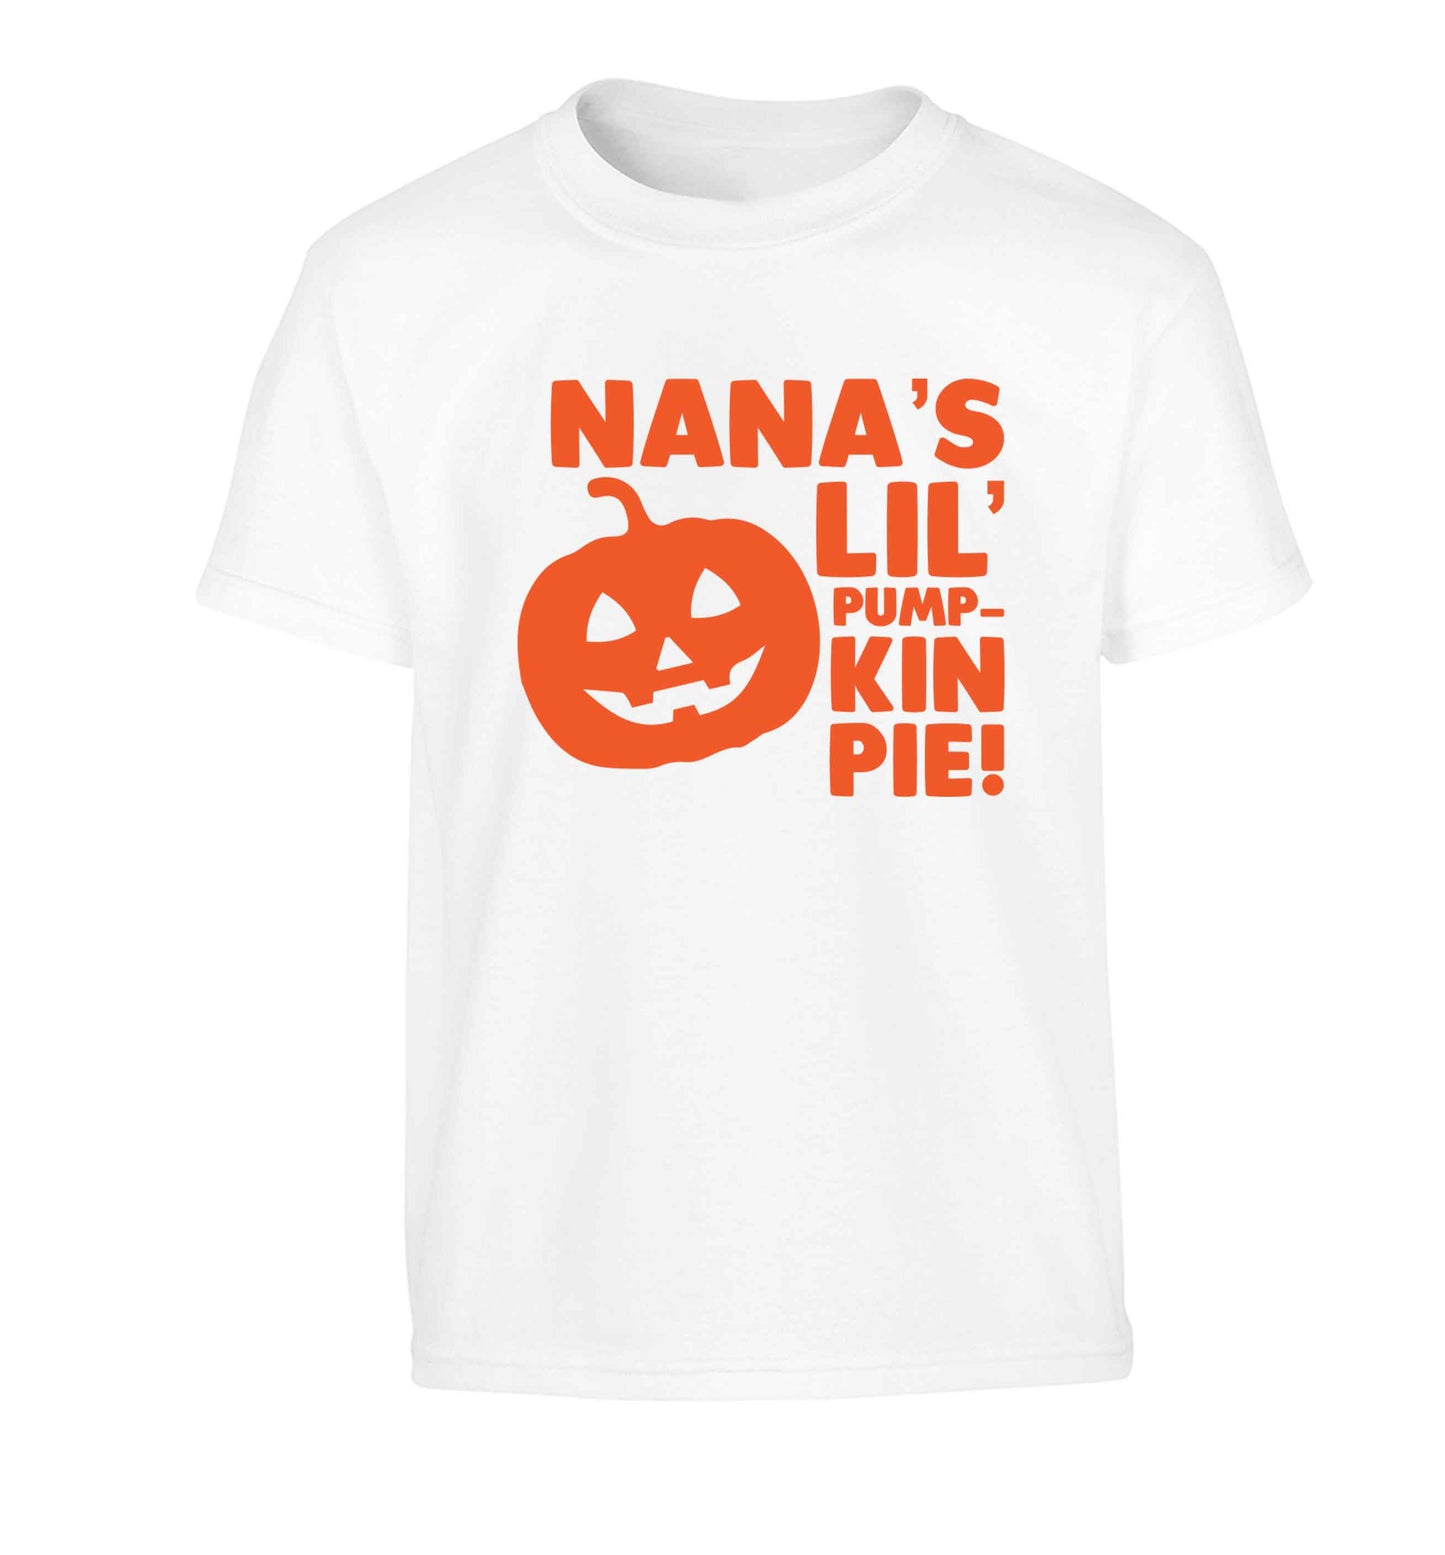 Nana's lil' pumpkin pie Children's white Tshirt 12-13 Years